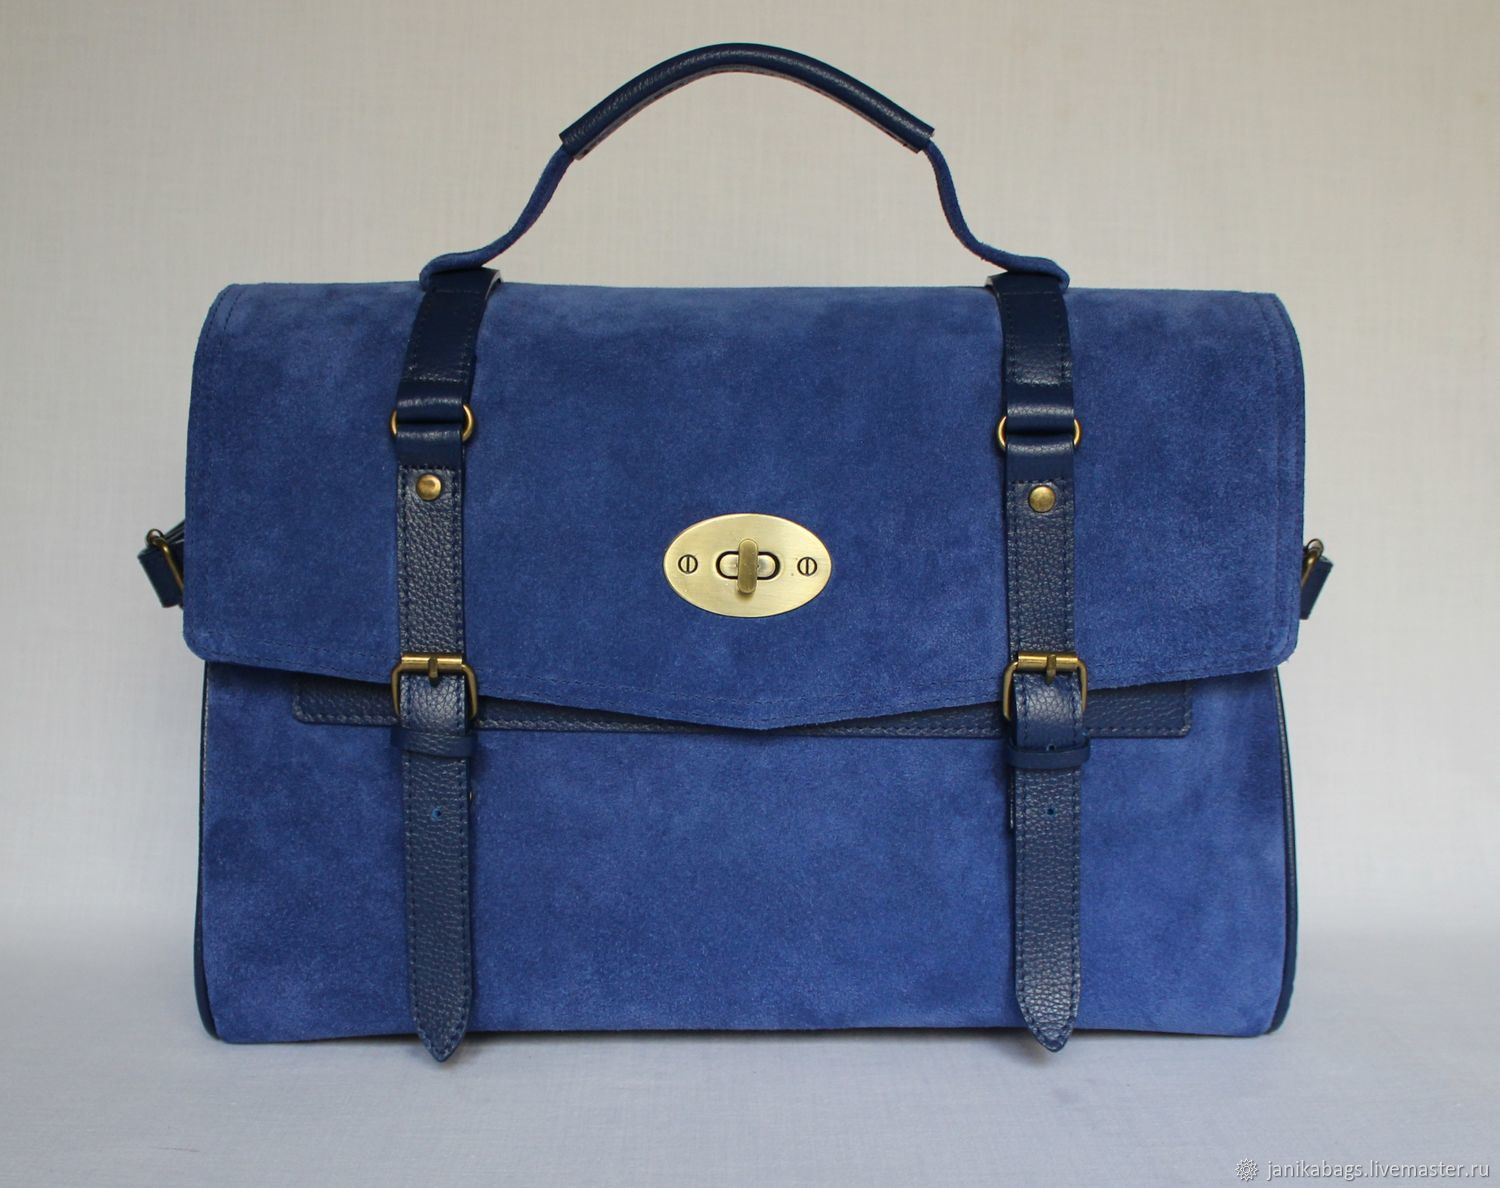 Синяя мужская сумка. Сумка портфель. Мужская сумка портфель синяя. Портфель мужской синий. Голубая сумка портфель.